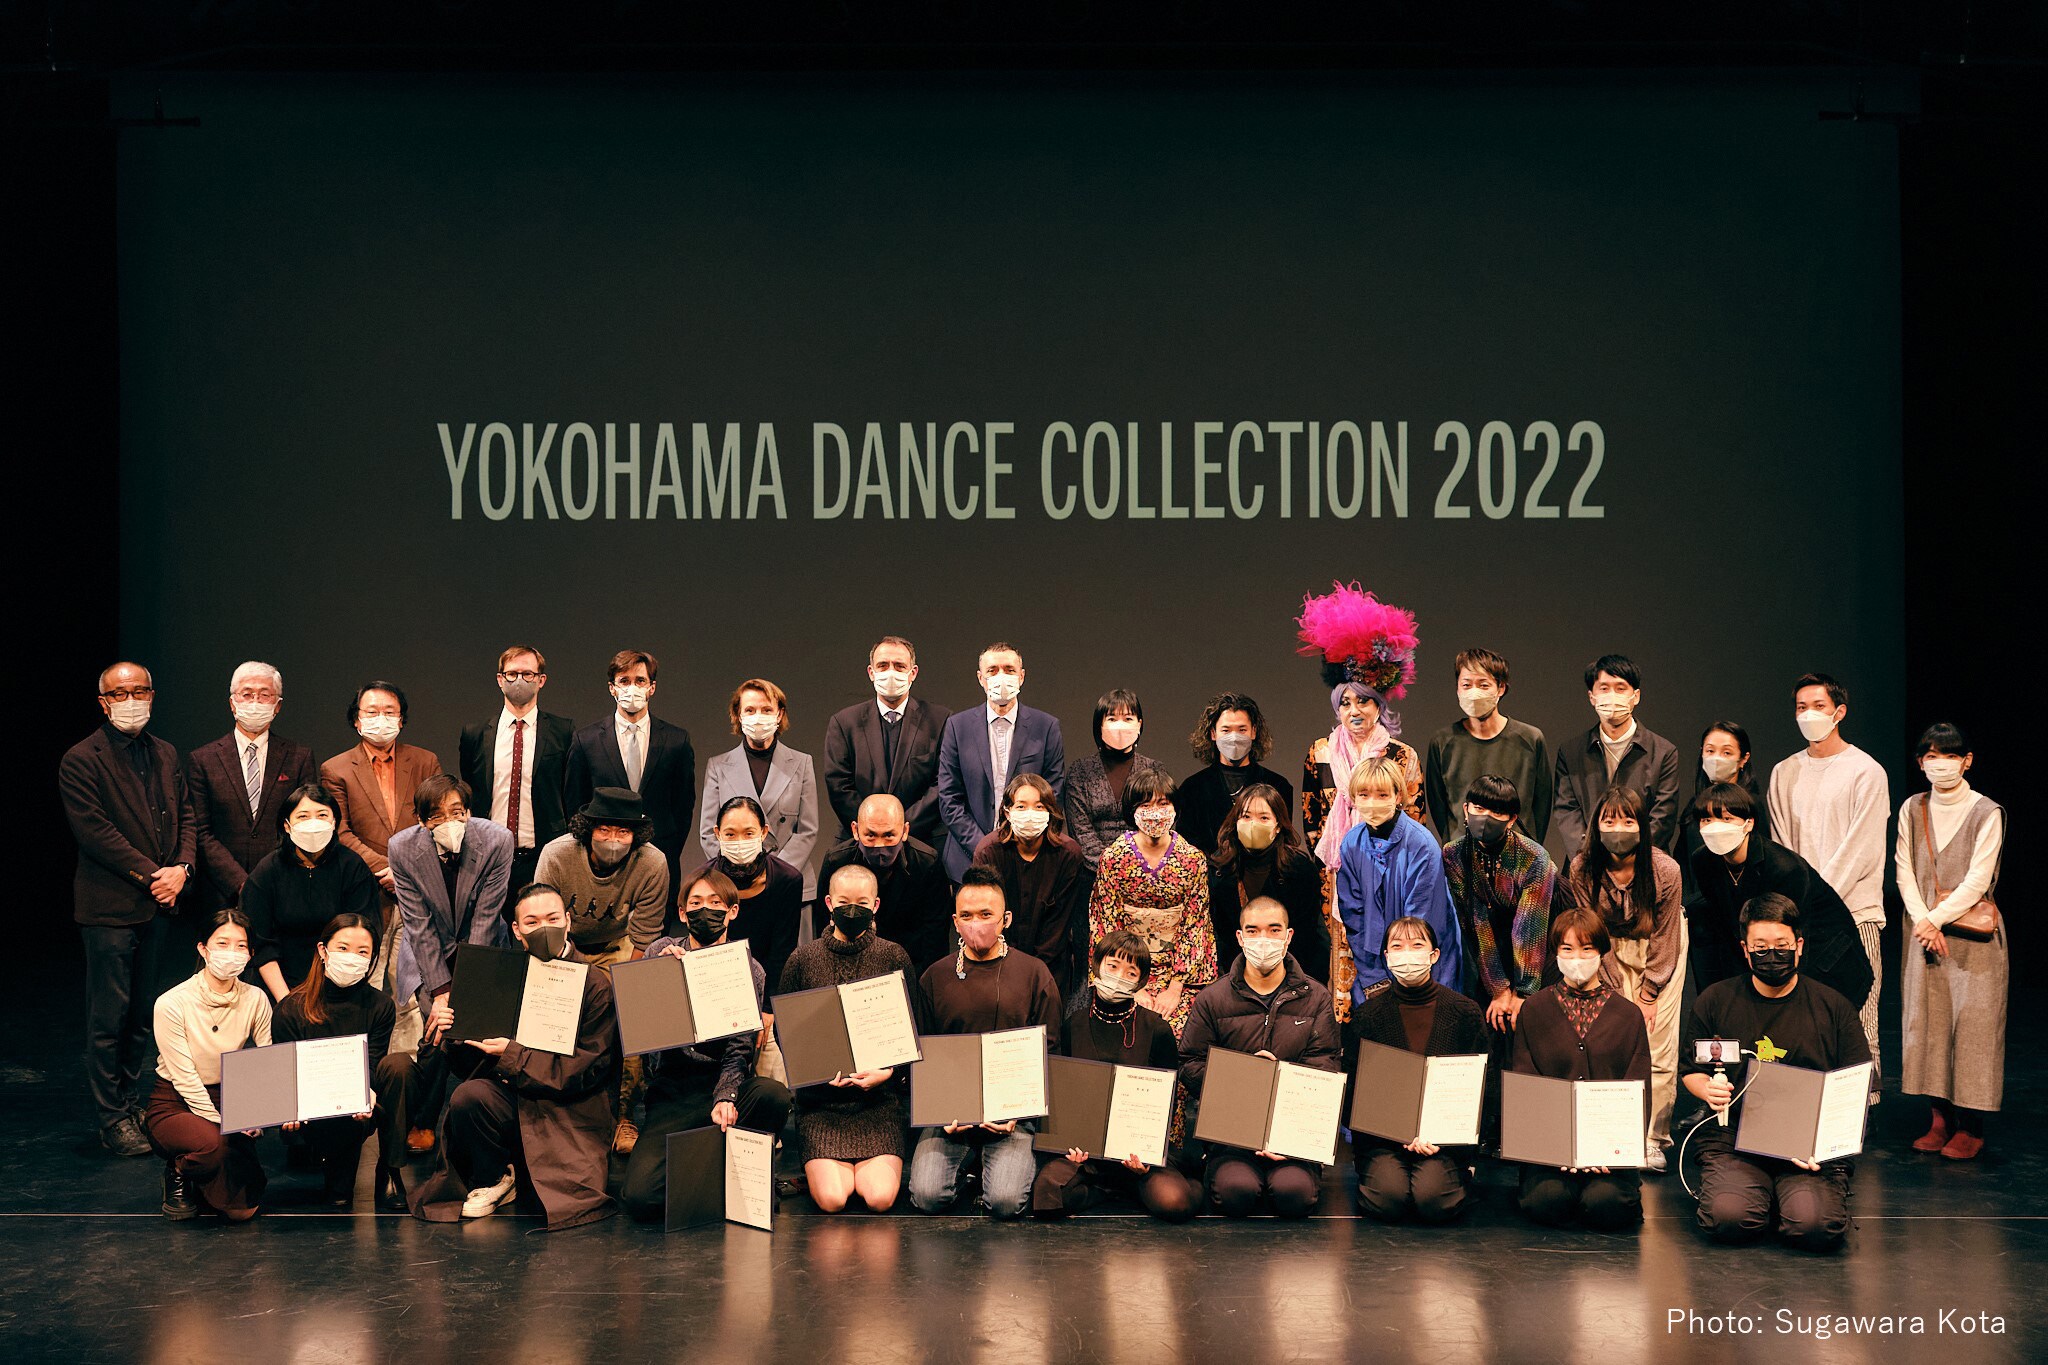 Yokohama Dance Collection group photo 2022